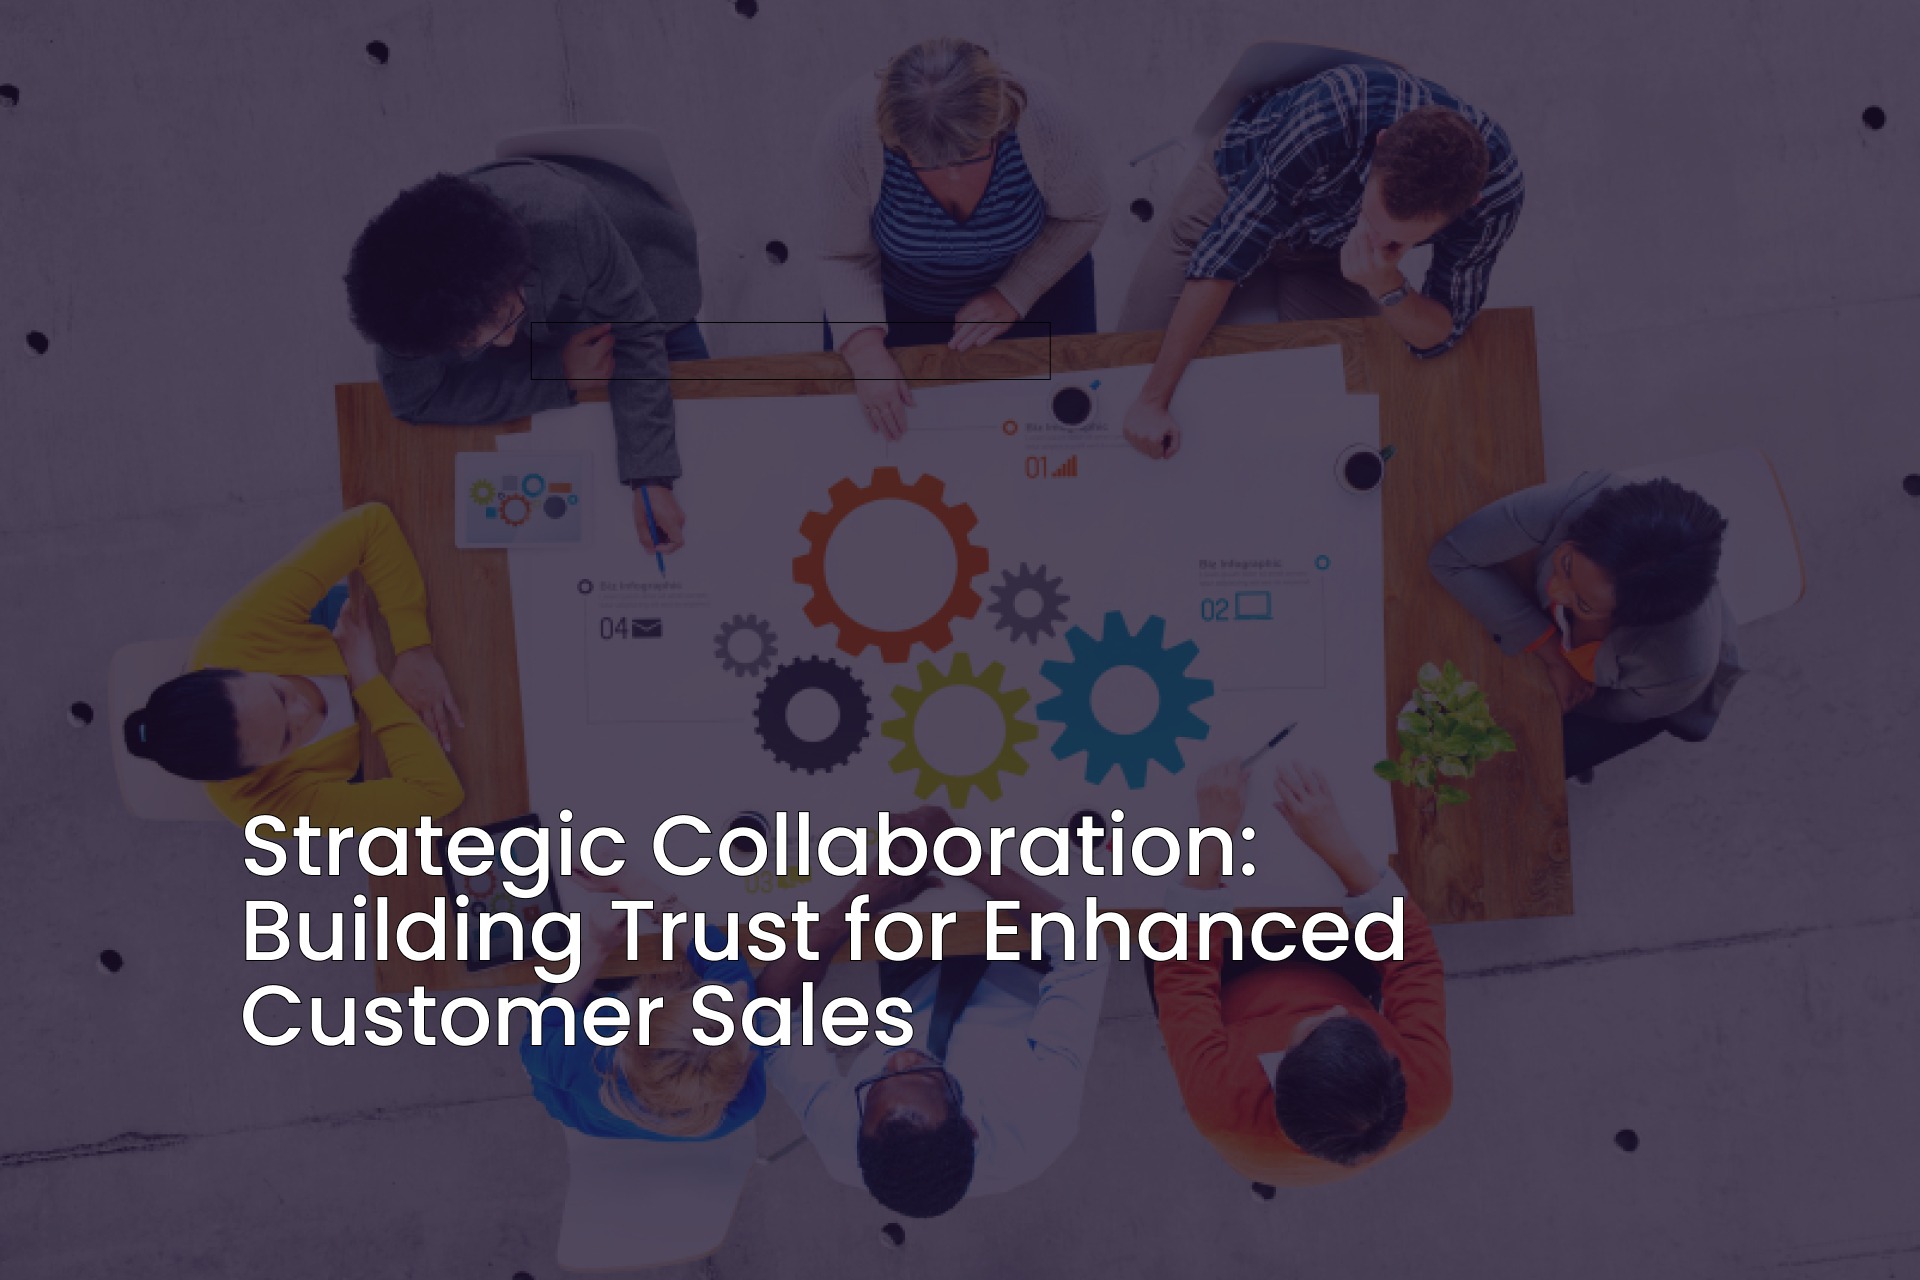 Strategic Collaboration: Building Trust for Enhanced Customer Sales